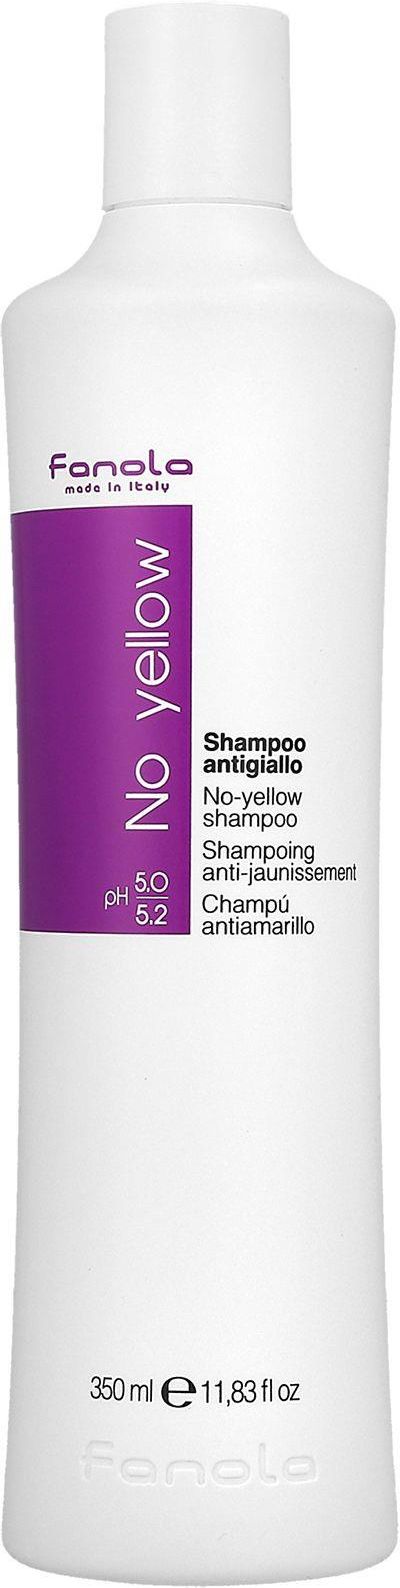 szampon fanola no yellow 350 ml